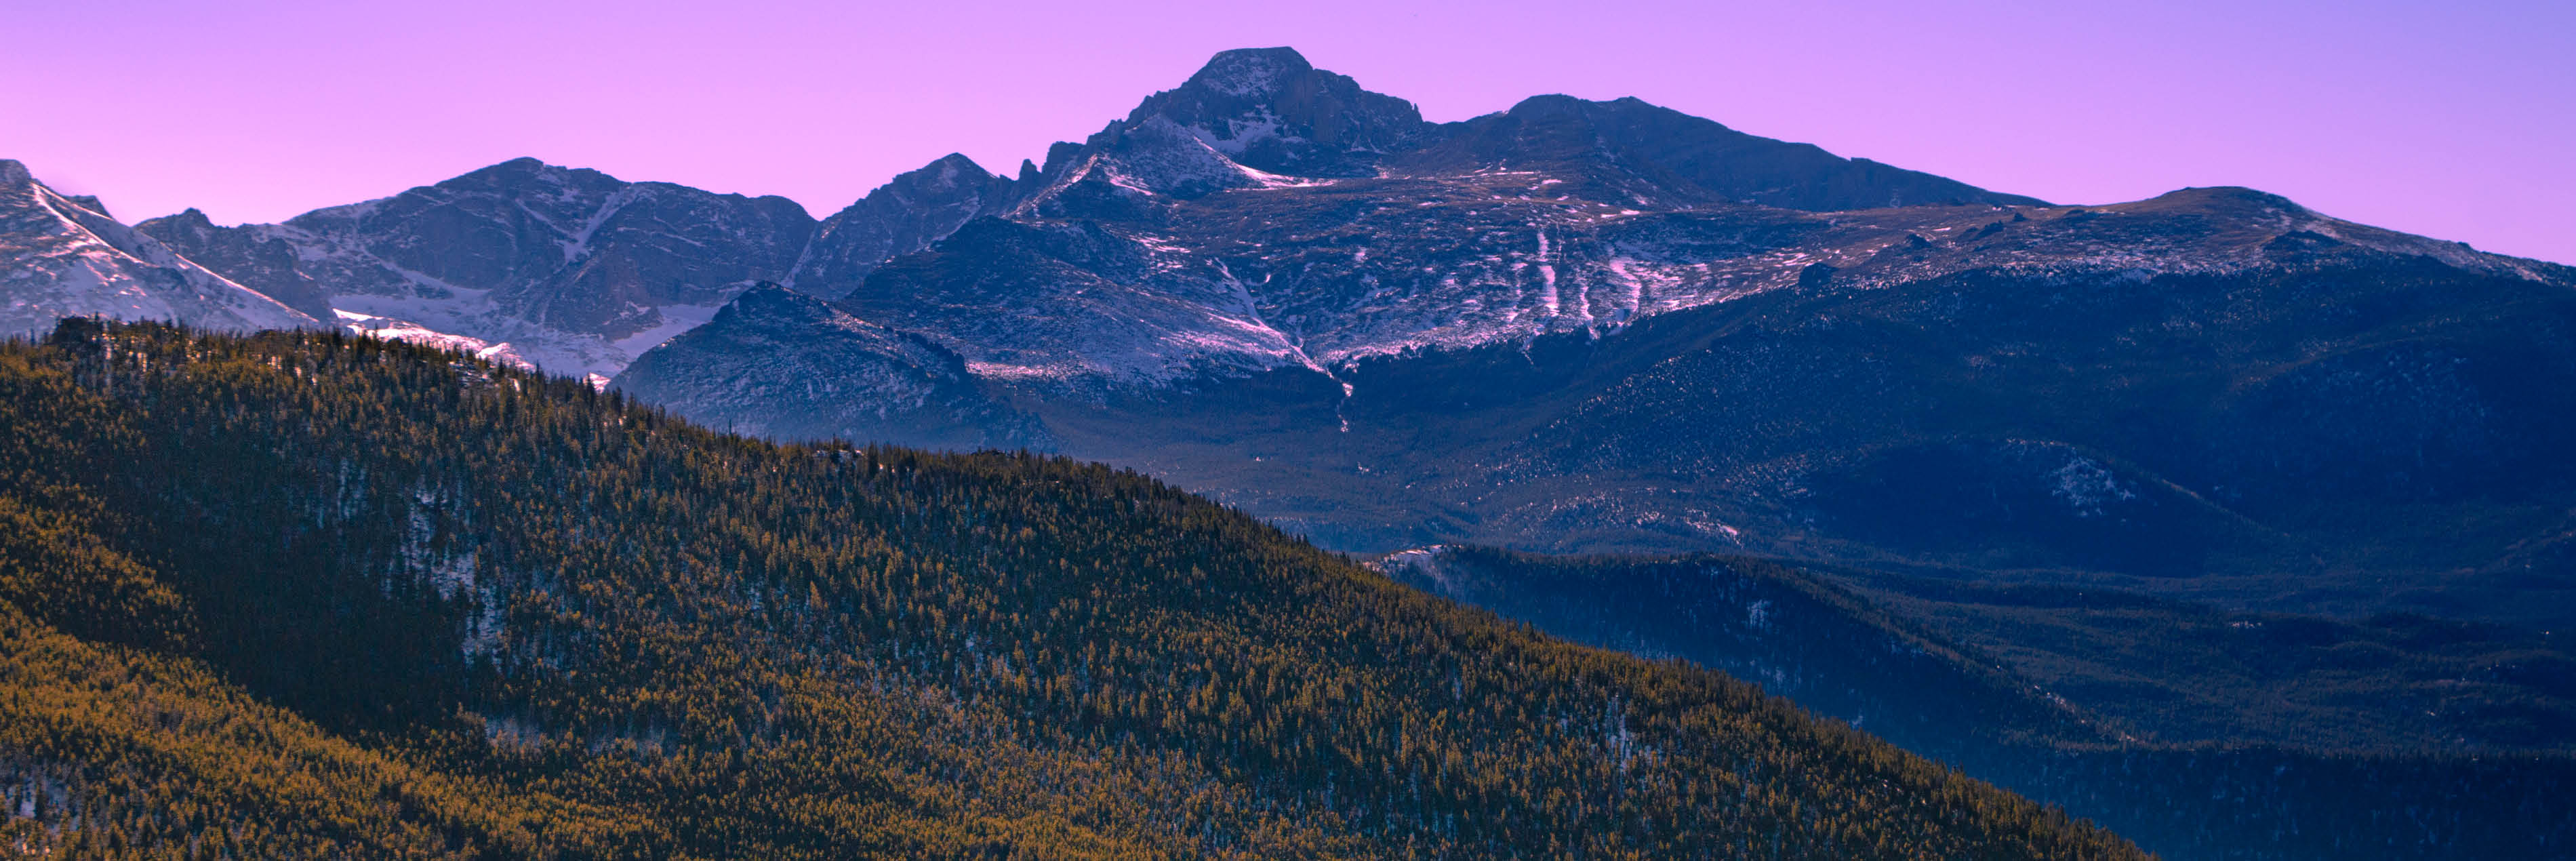 Mountains with a purple sky